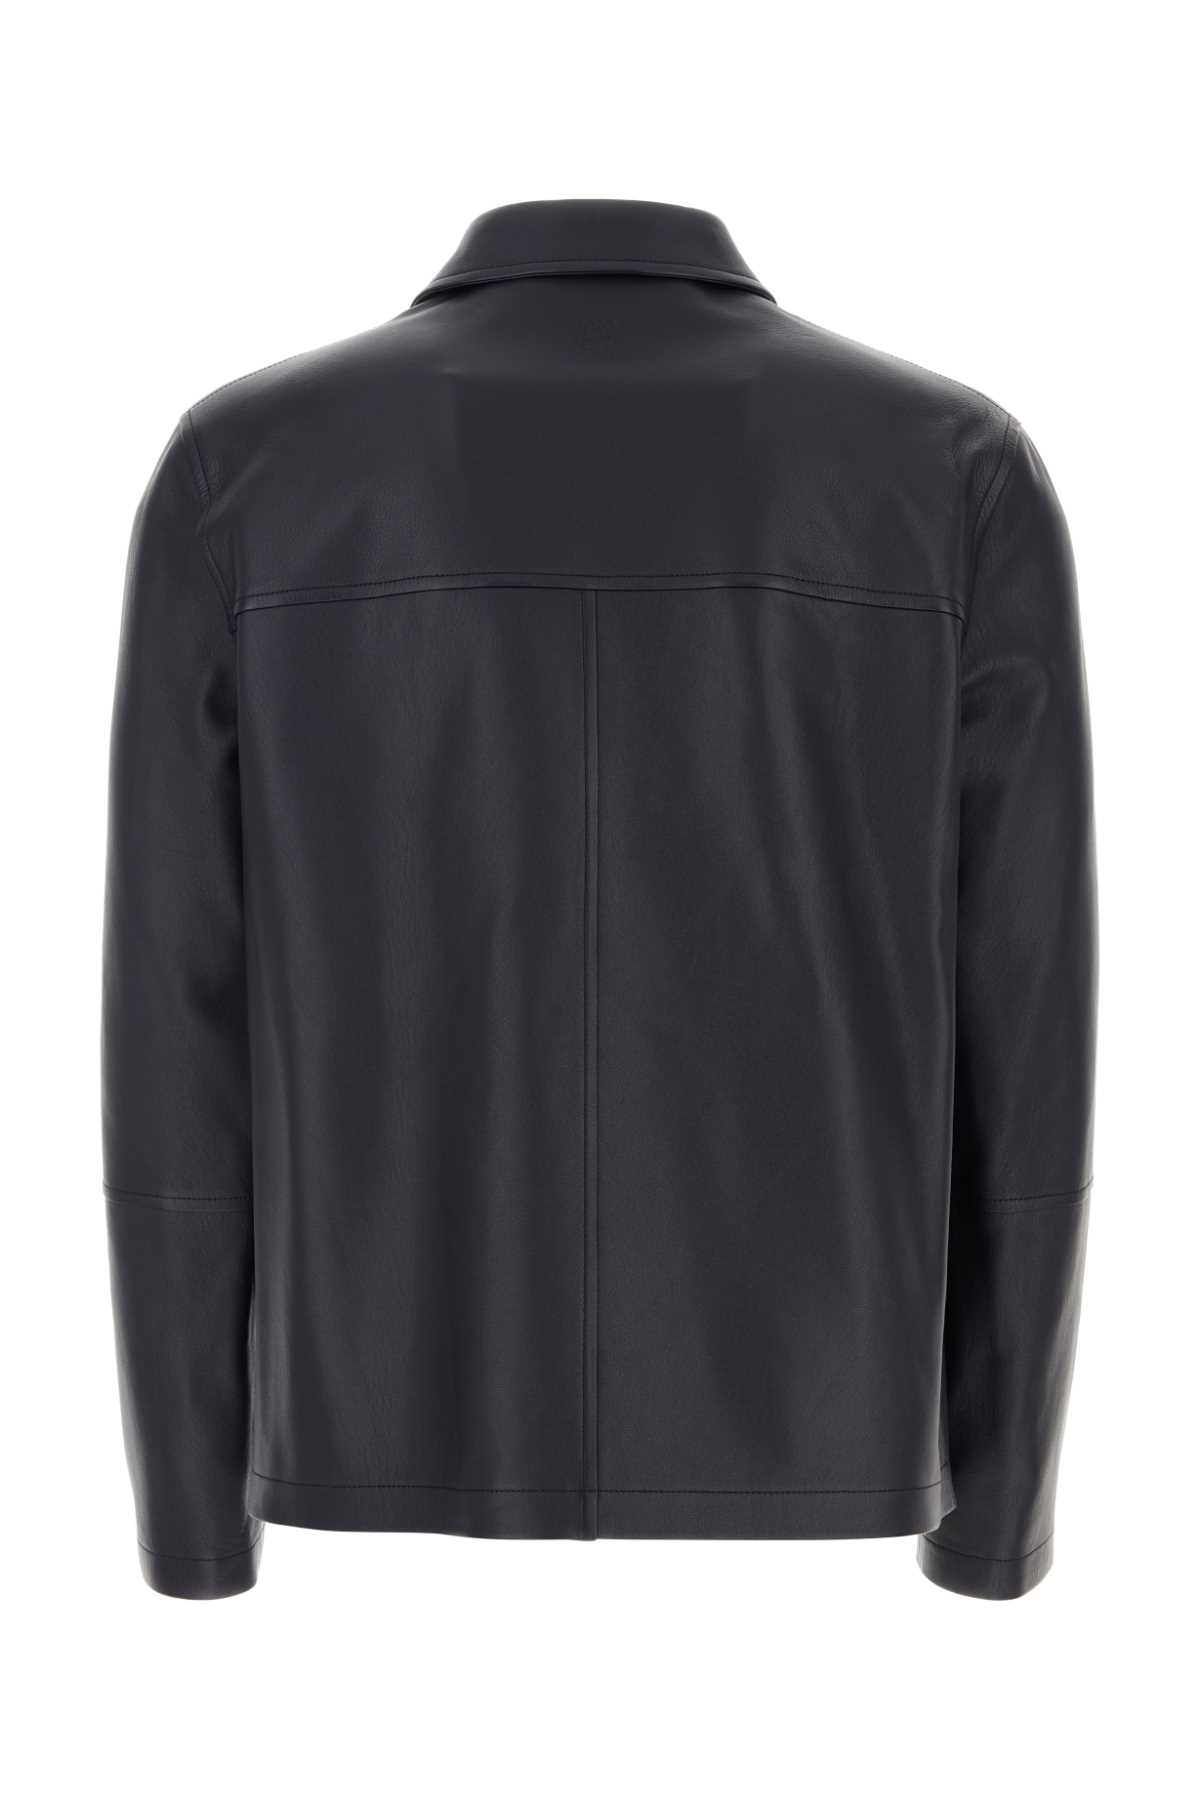 Loewe Black Nappa Leather Shirt In Darknavy